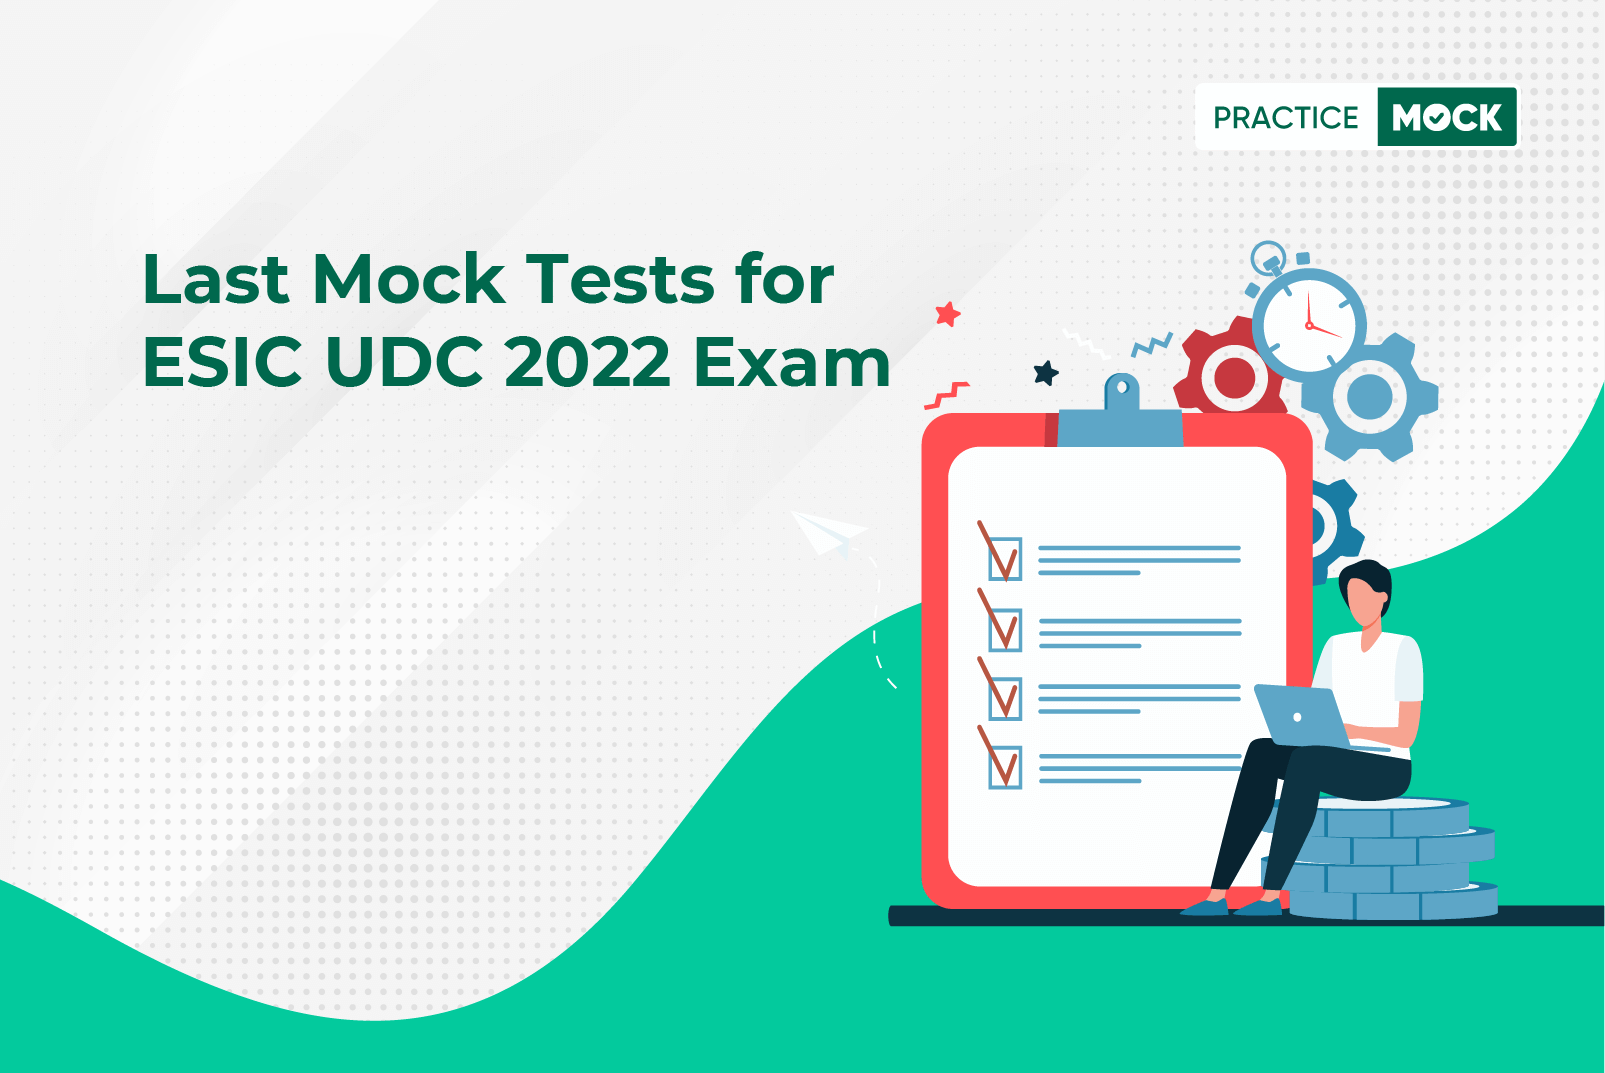 Last Mock Tests for ESIC UDC 2022 Exam